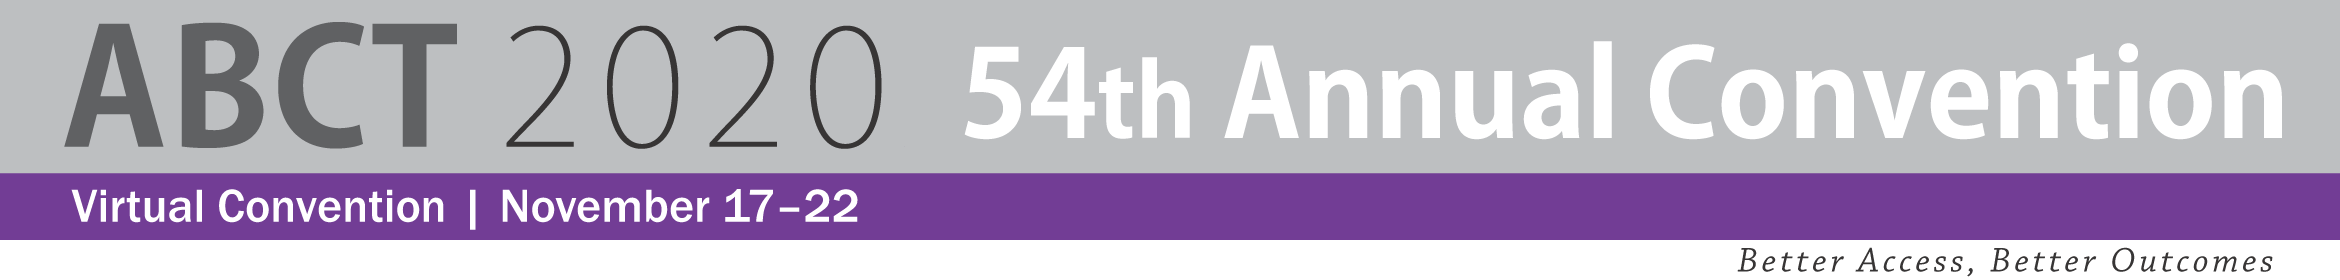 ABCT 54th Annual Convention Main banner